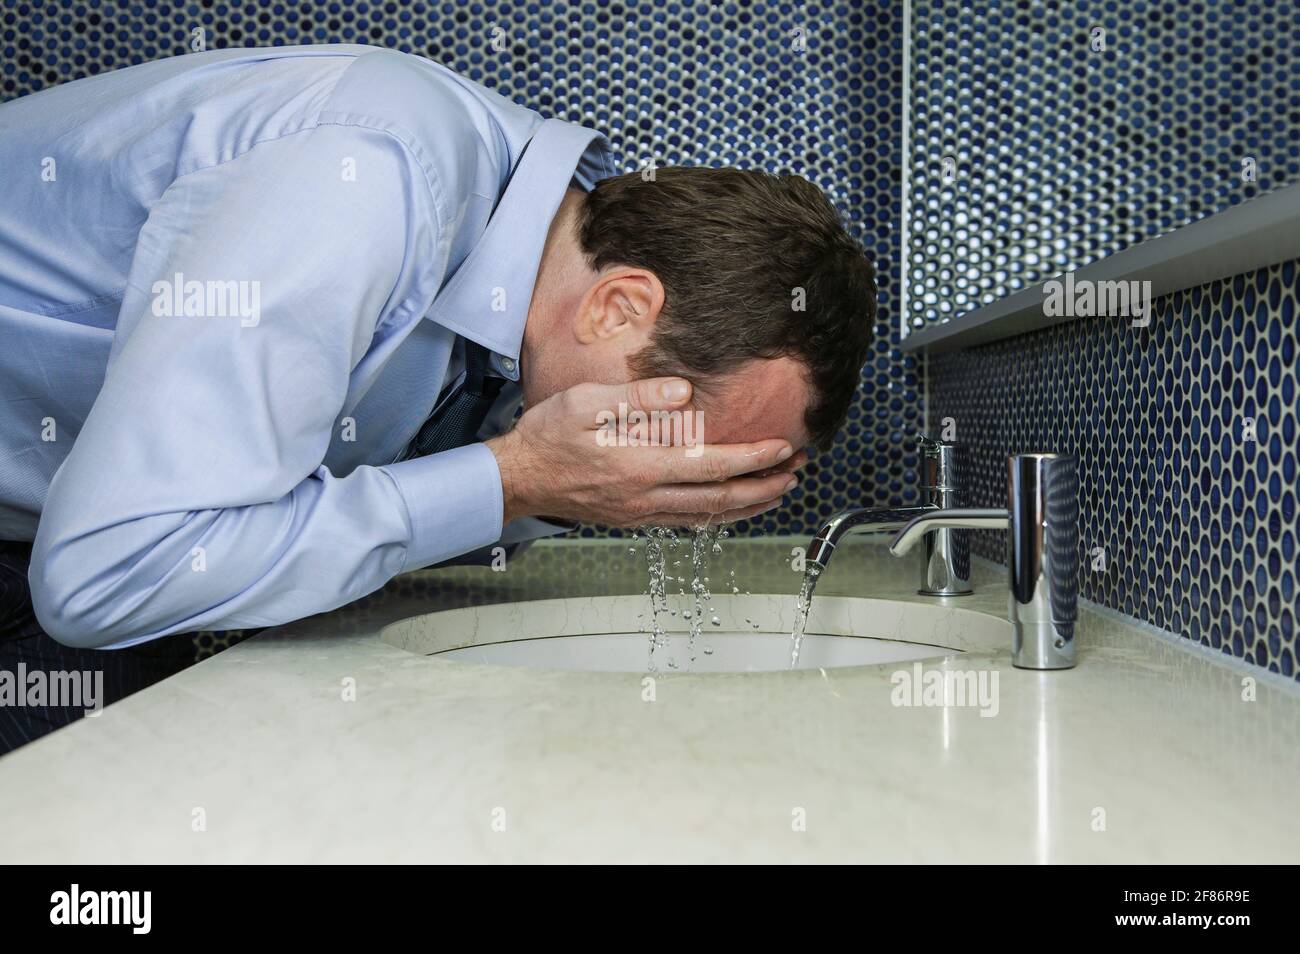 Businessman splashing water on face at bathroom sink Stock Photo